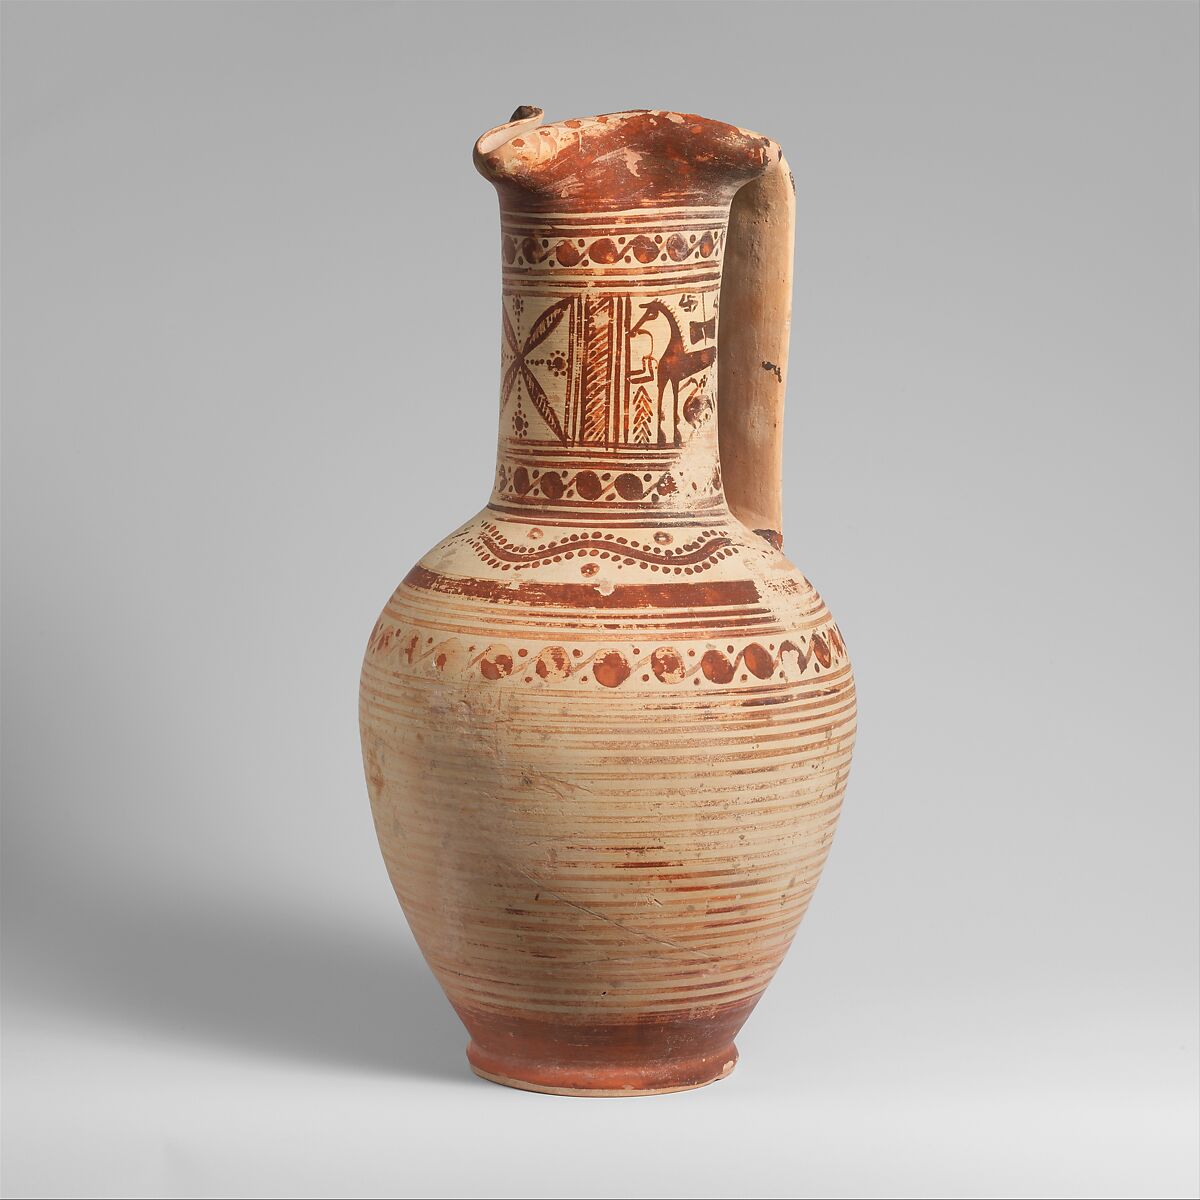 Terracotta oinochoe (jug), Attributed to the Cesnola Painter, Terracotta, Greek, Euboean 